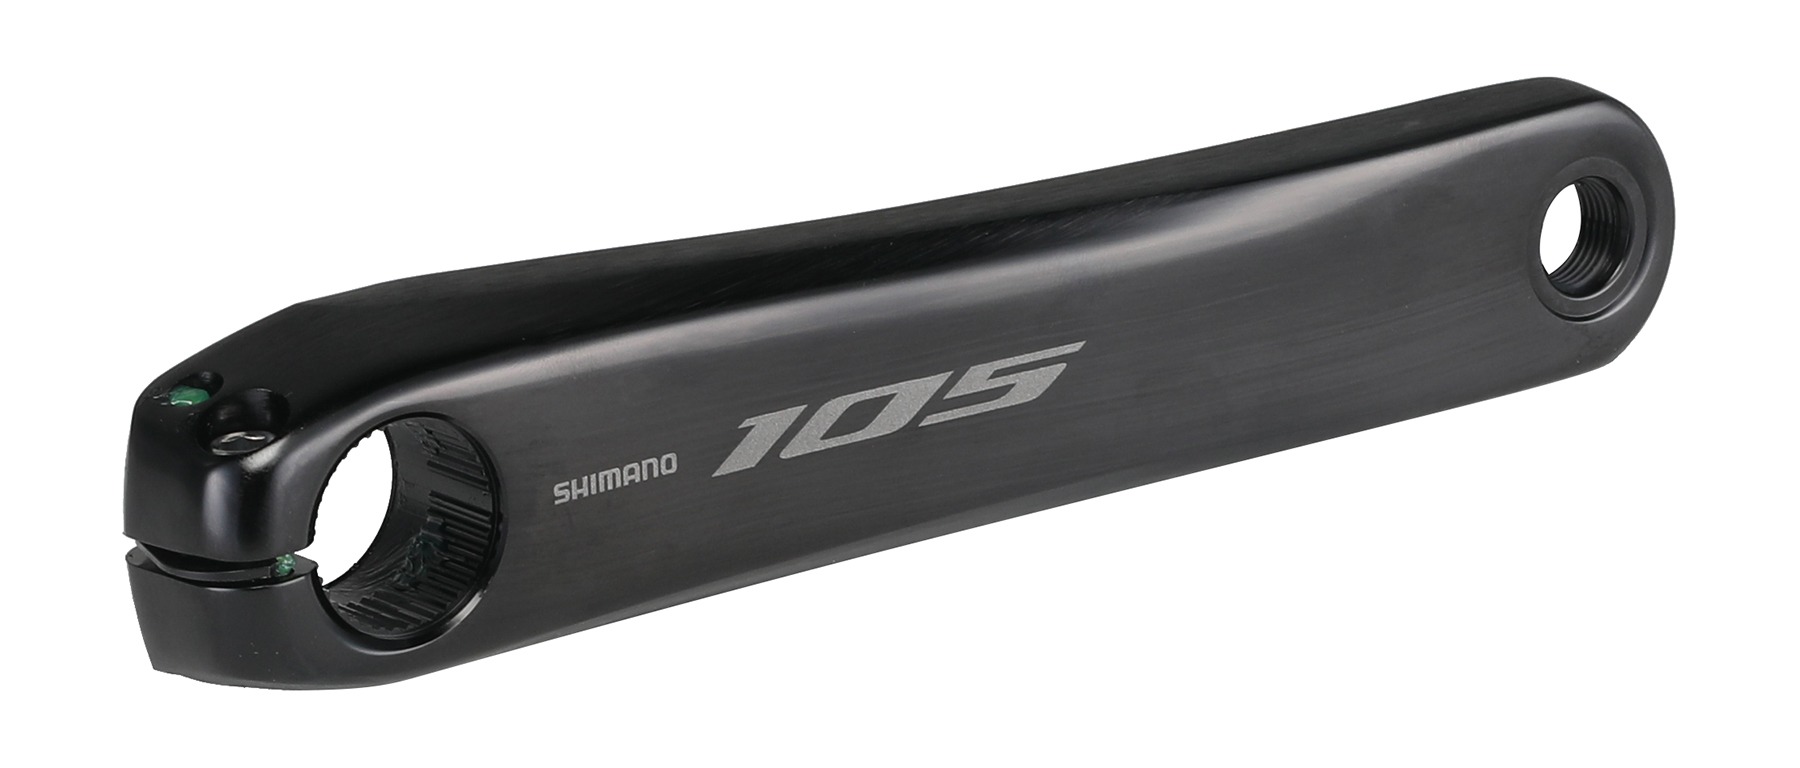 Shimano 105 FC-R7100 Crankset